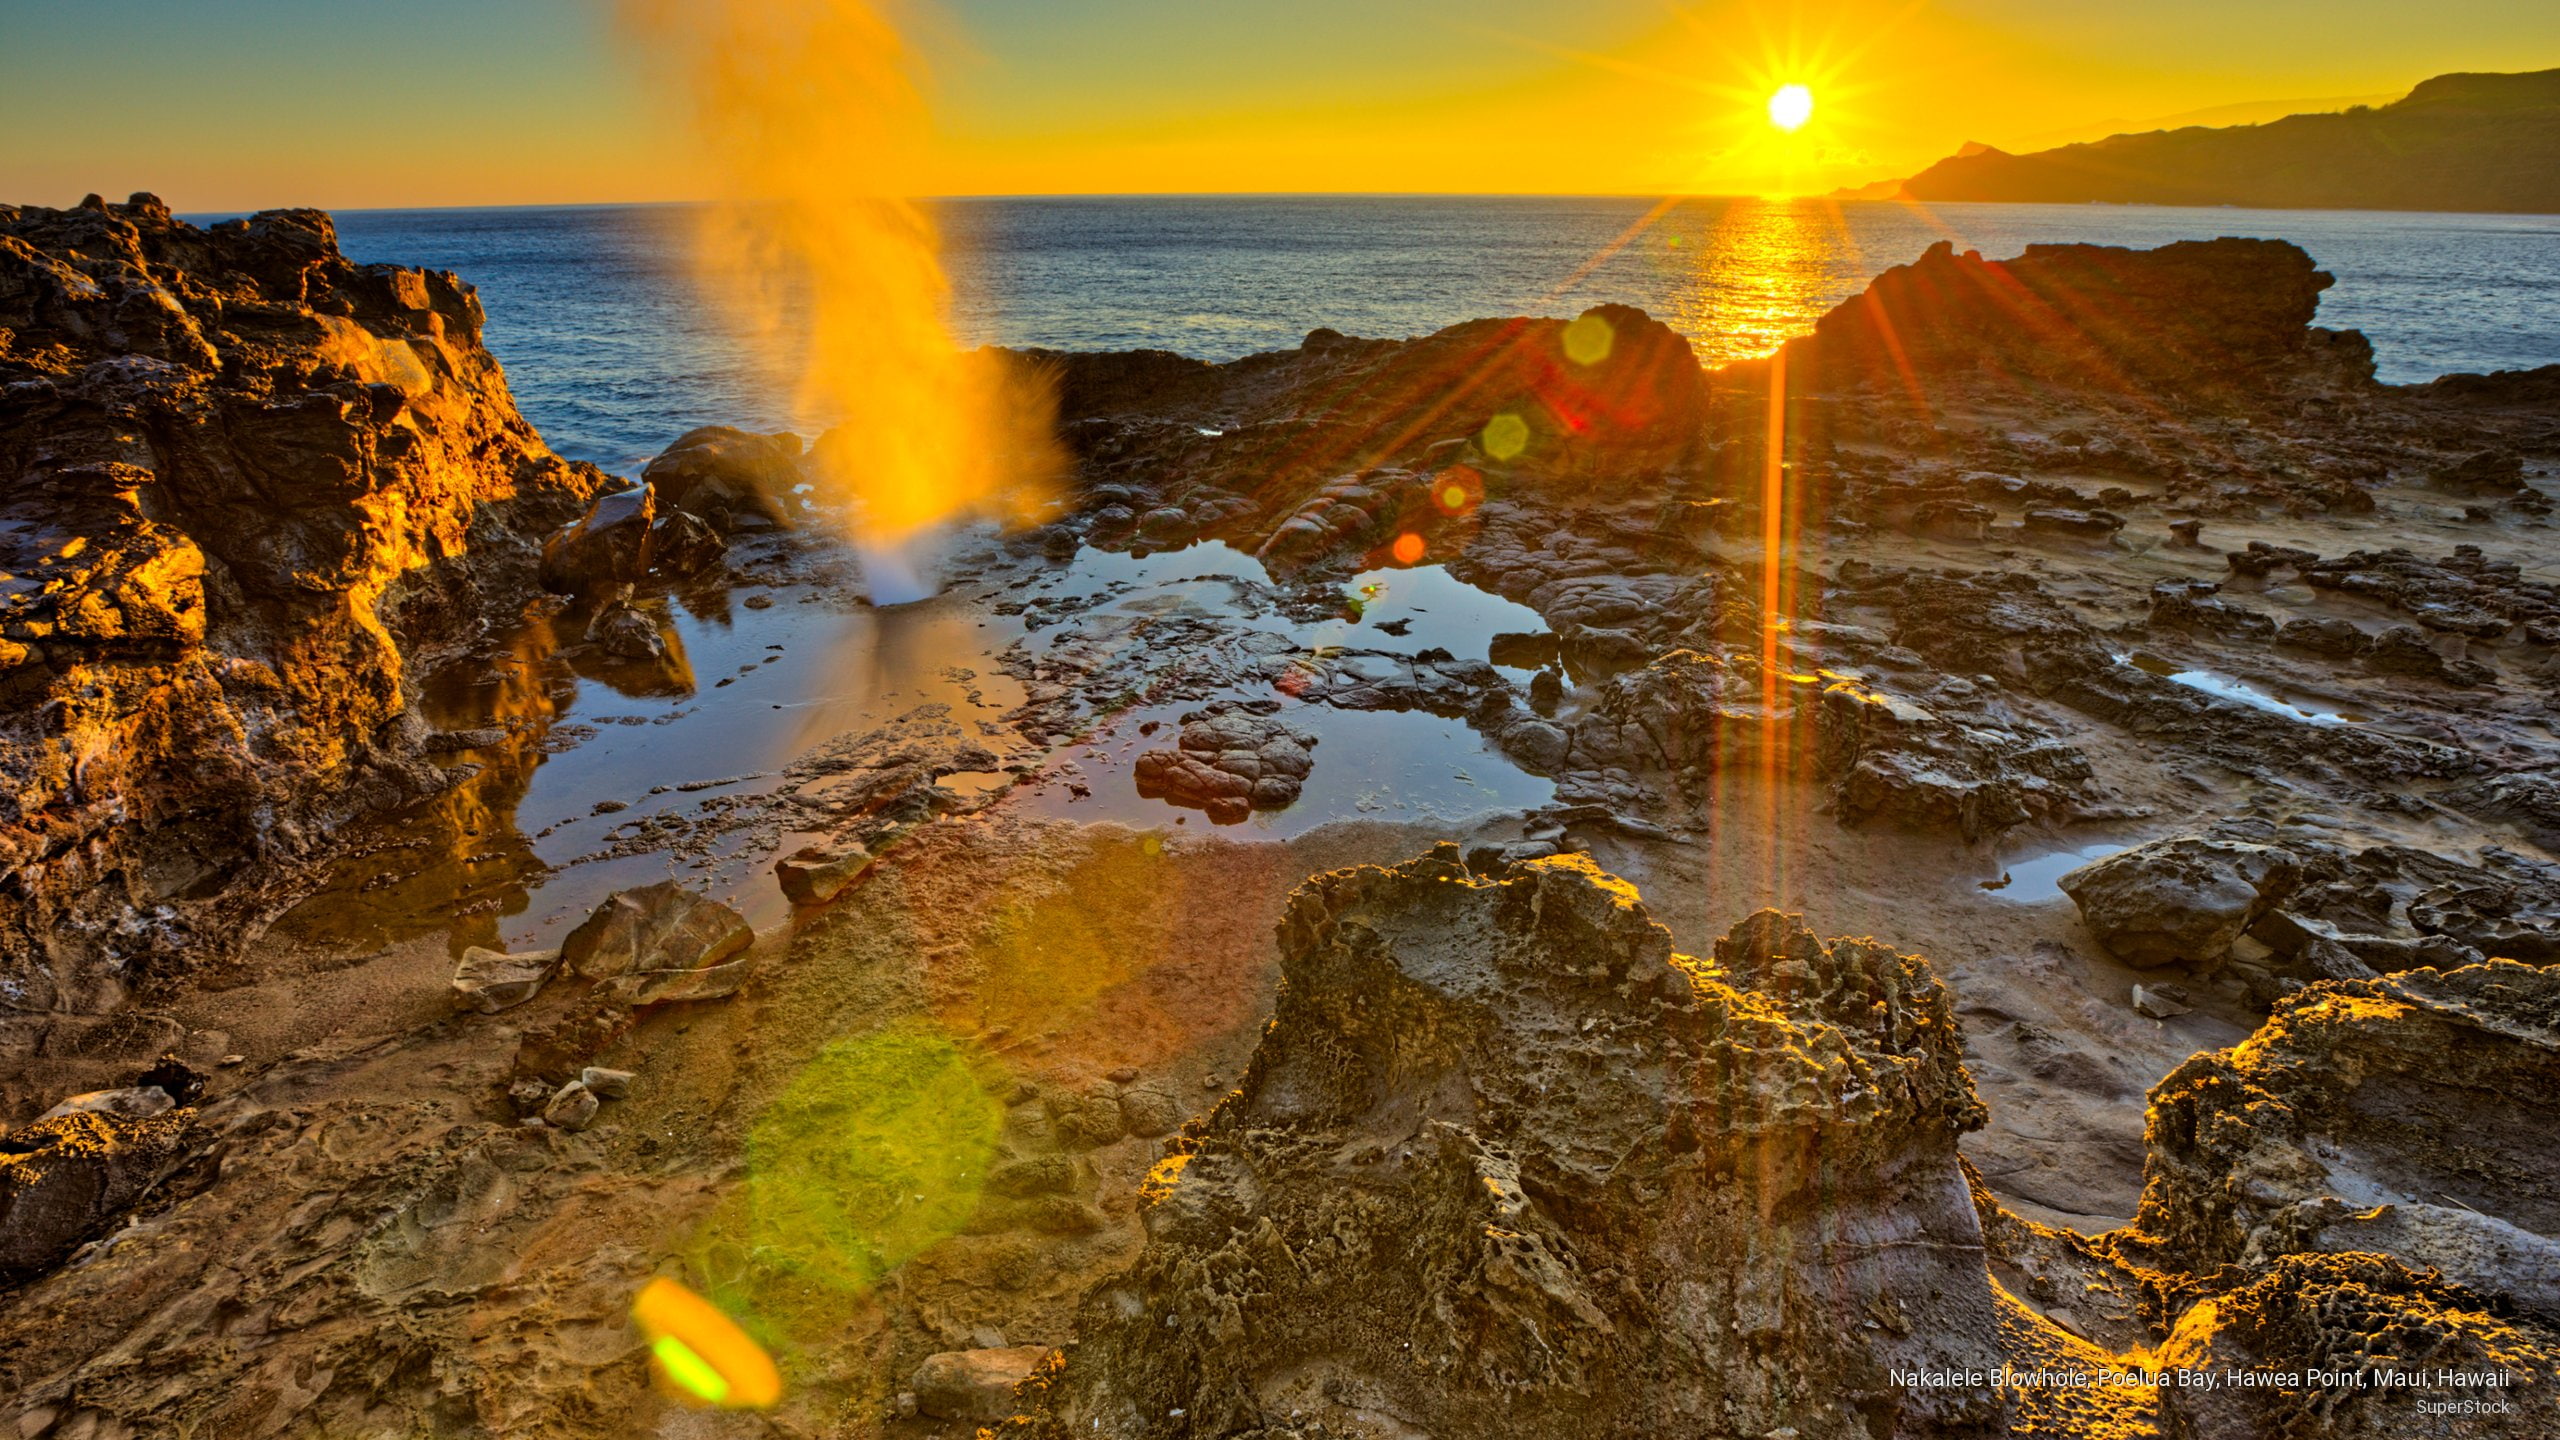 Nakalele Blowhole, Poelua Bay, Hawea Point, Maui, Hawaii, Sunrises/Sunsets